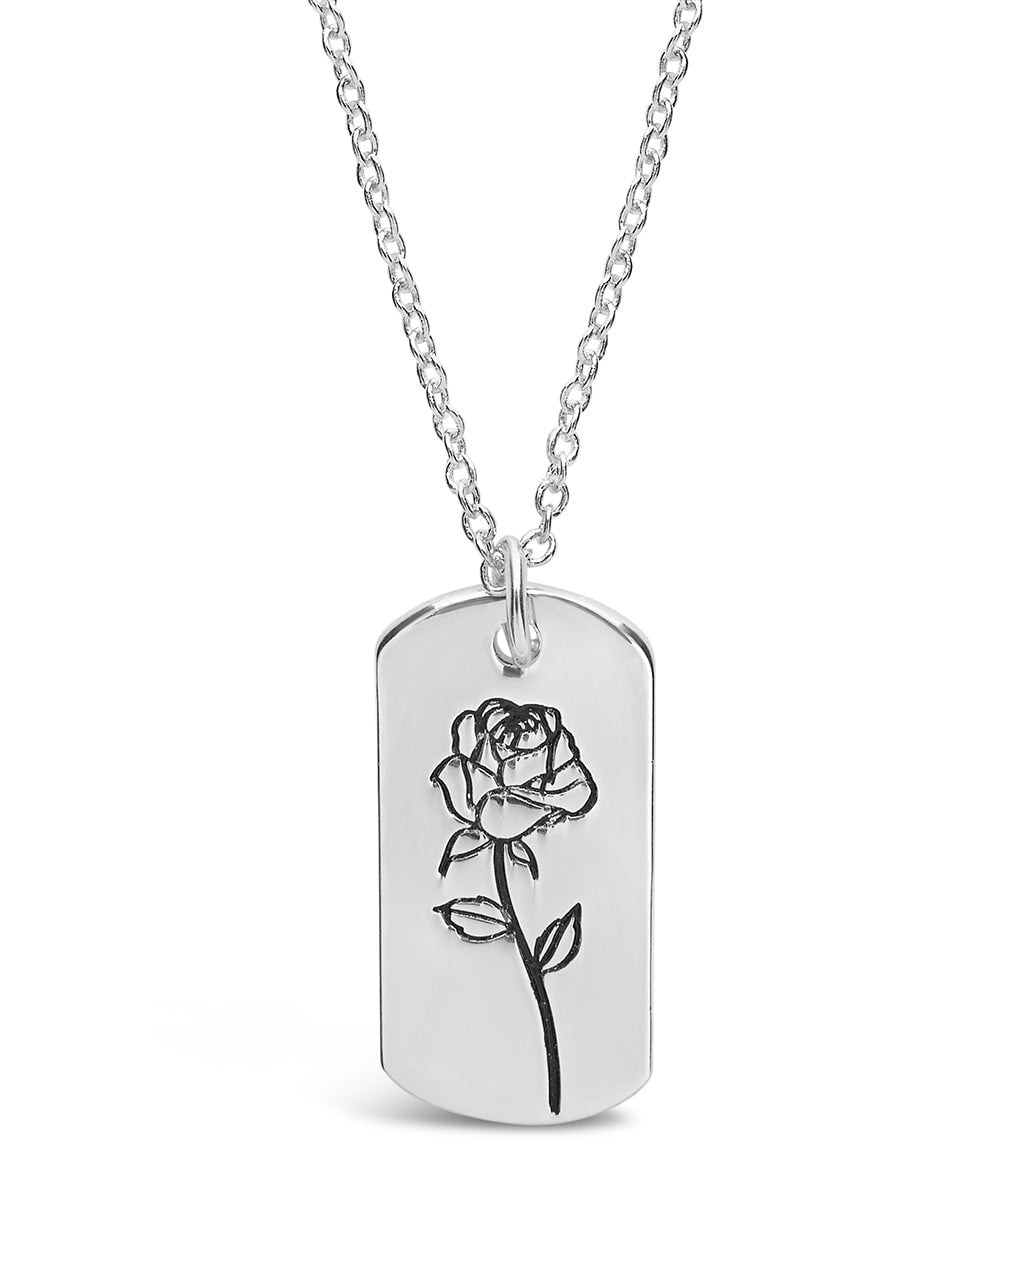 Birth Flower Pendant Necklace Sterling Forever Silver June / Rose 